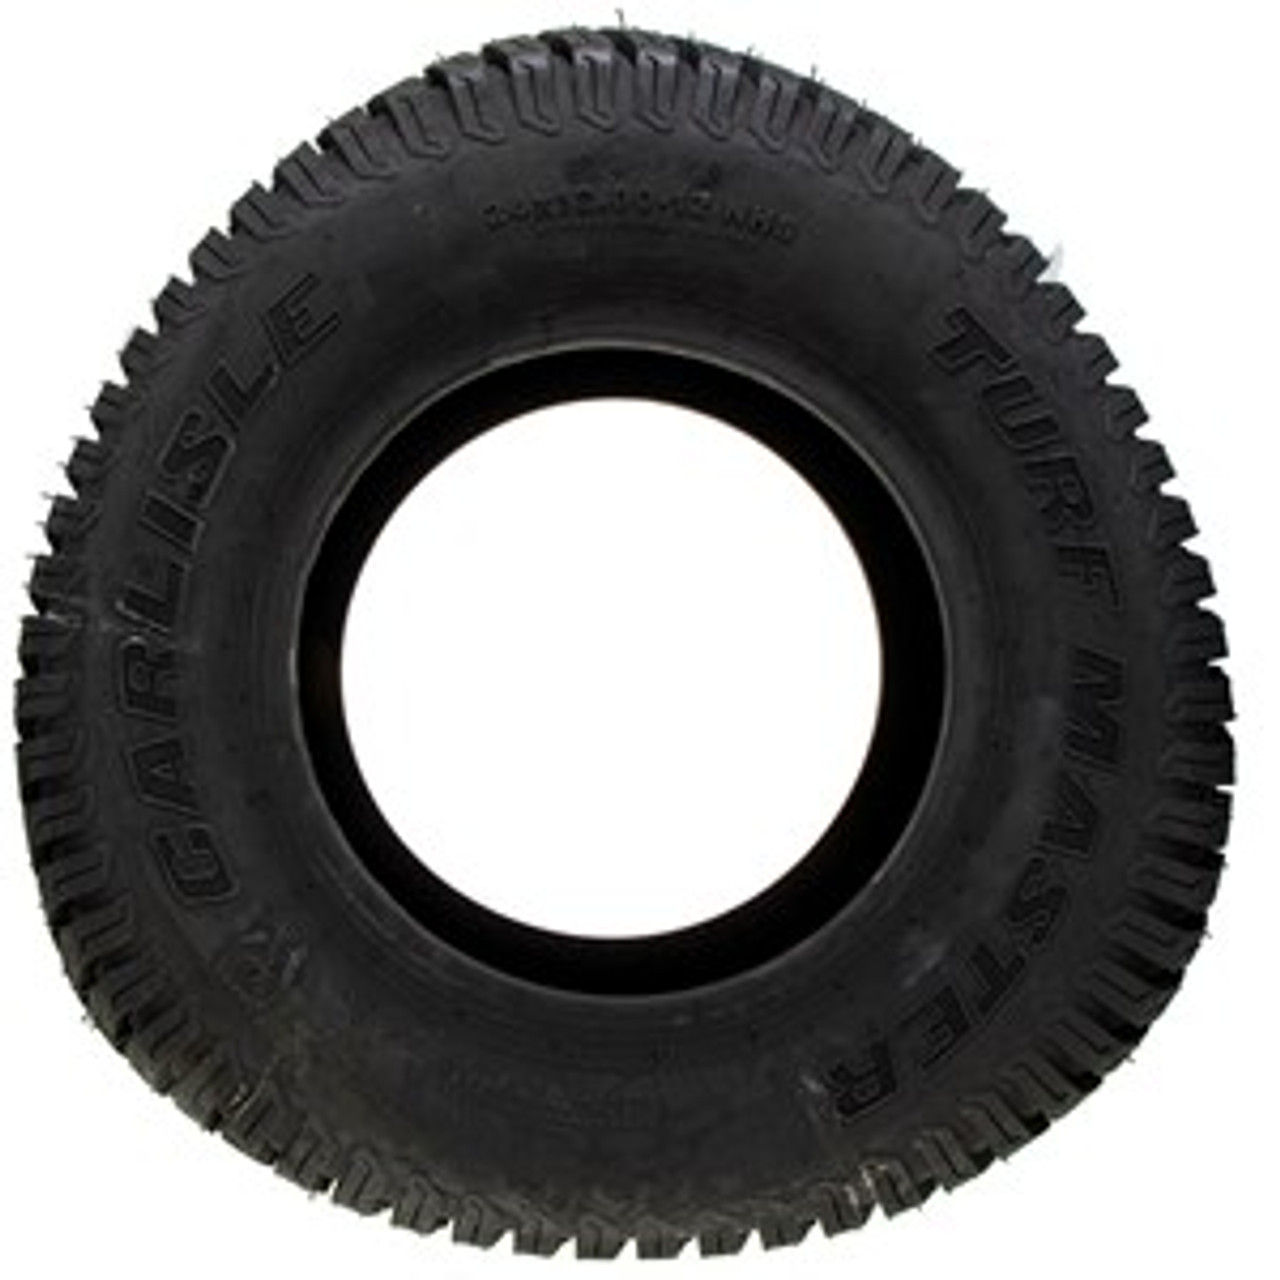 Tire - SERV.24X12.0-12